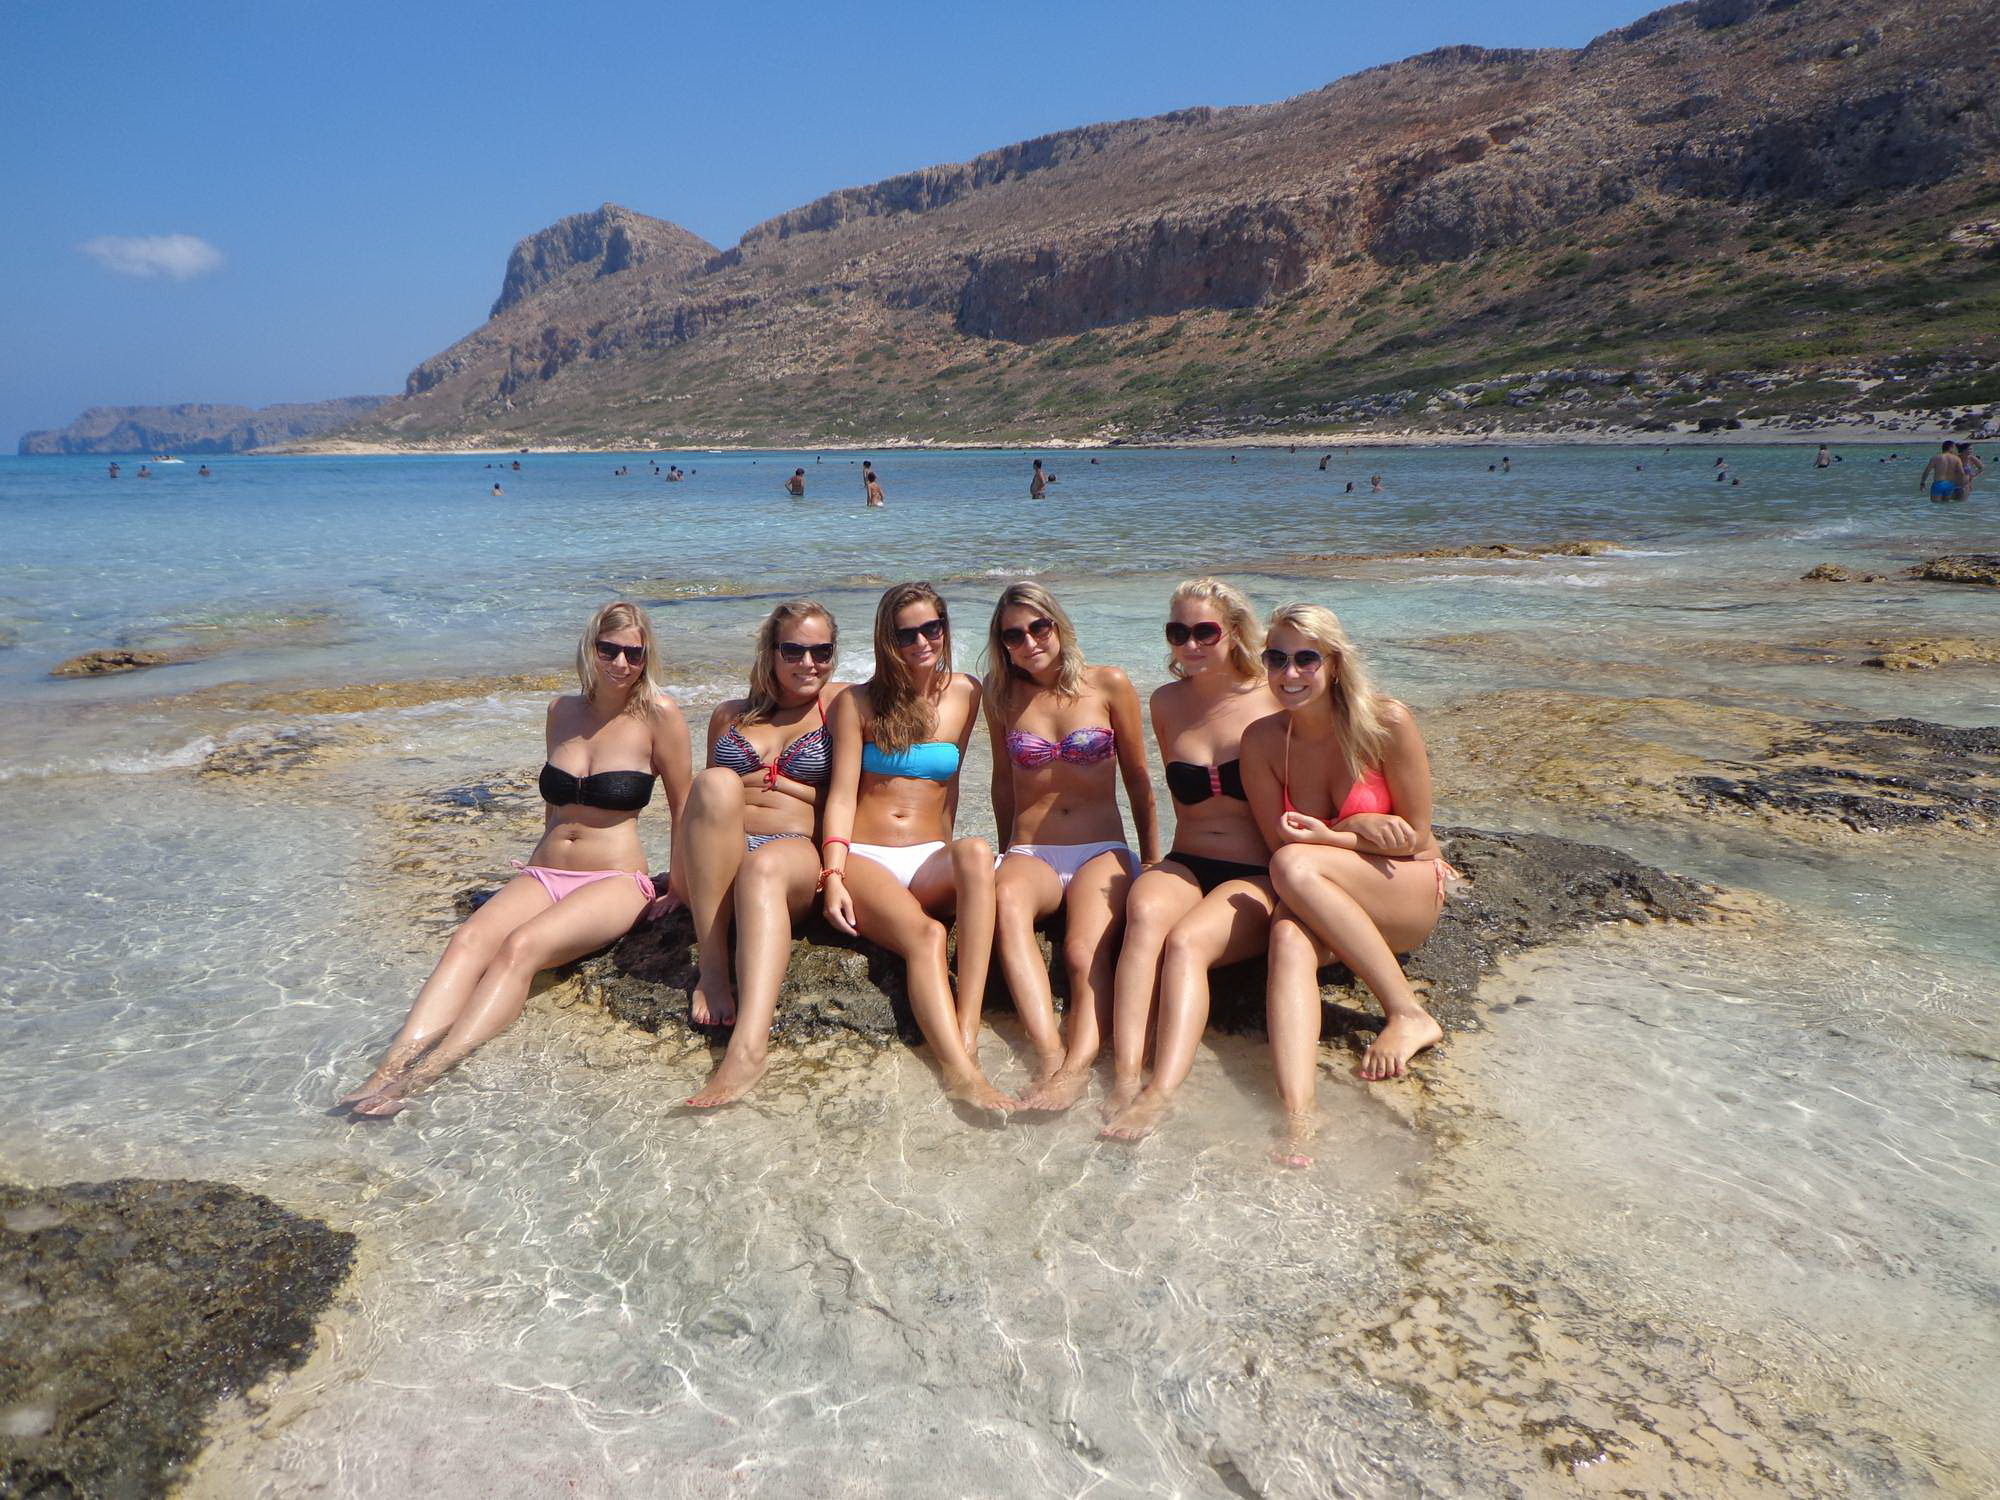 6 Pretty Bikini Teens On Vacation